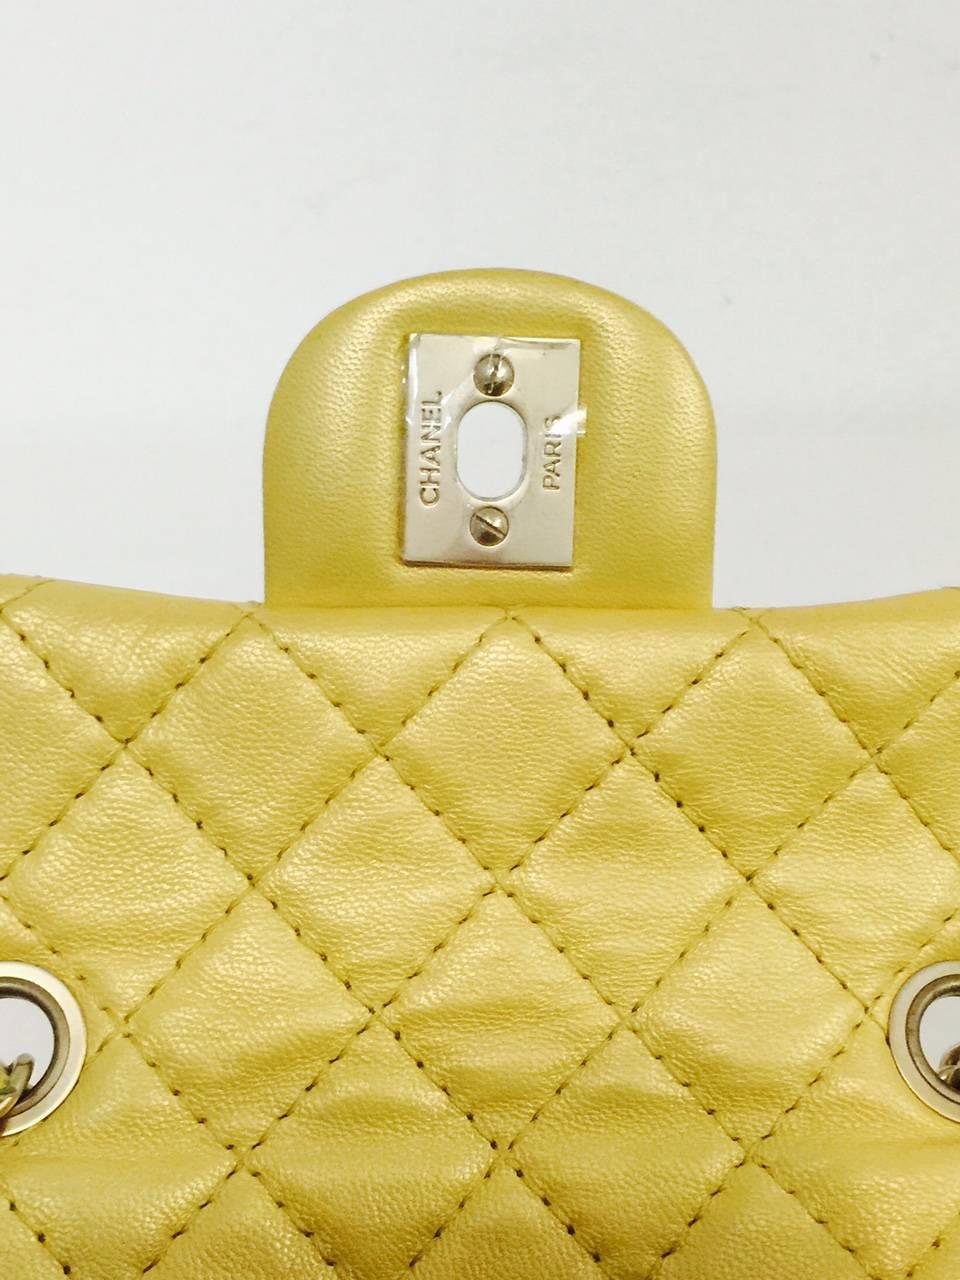 New Chanel Gold Metallic Ltd Edition Mini Flap Bag With Jeweled Closure 14671349 2